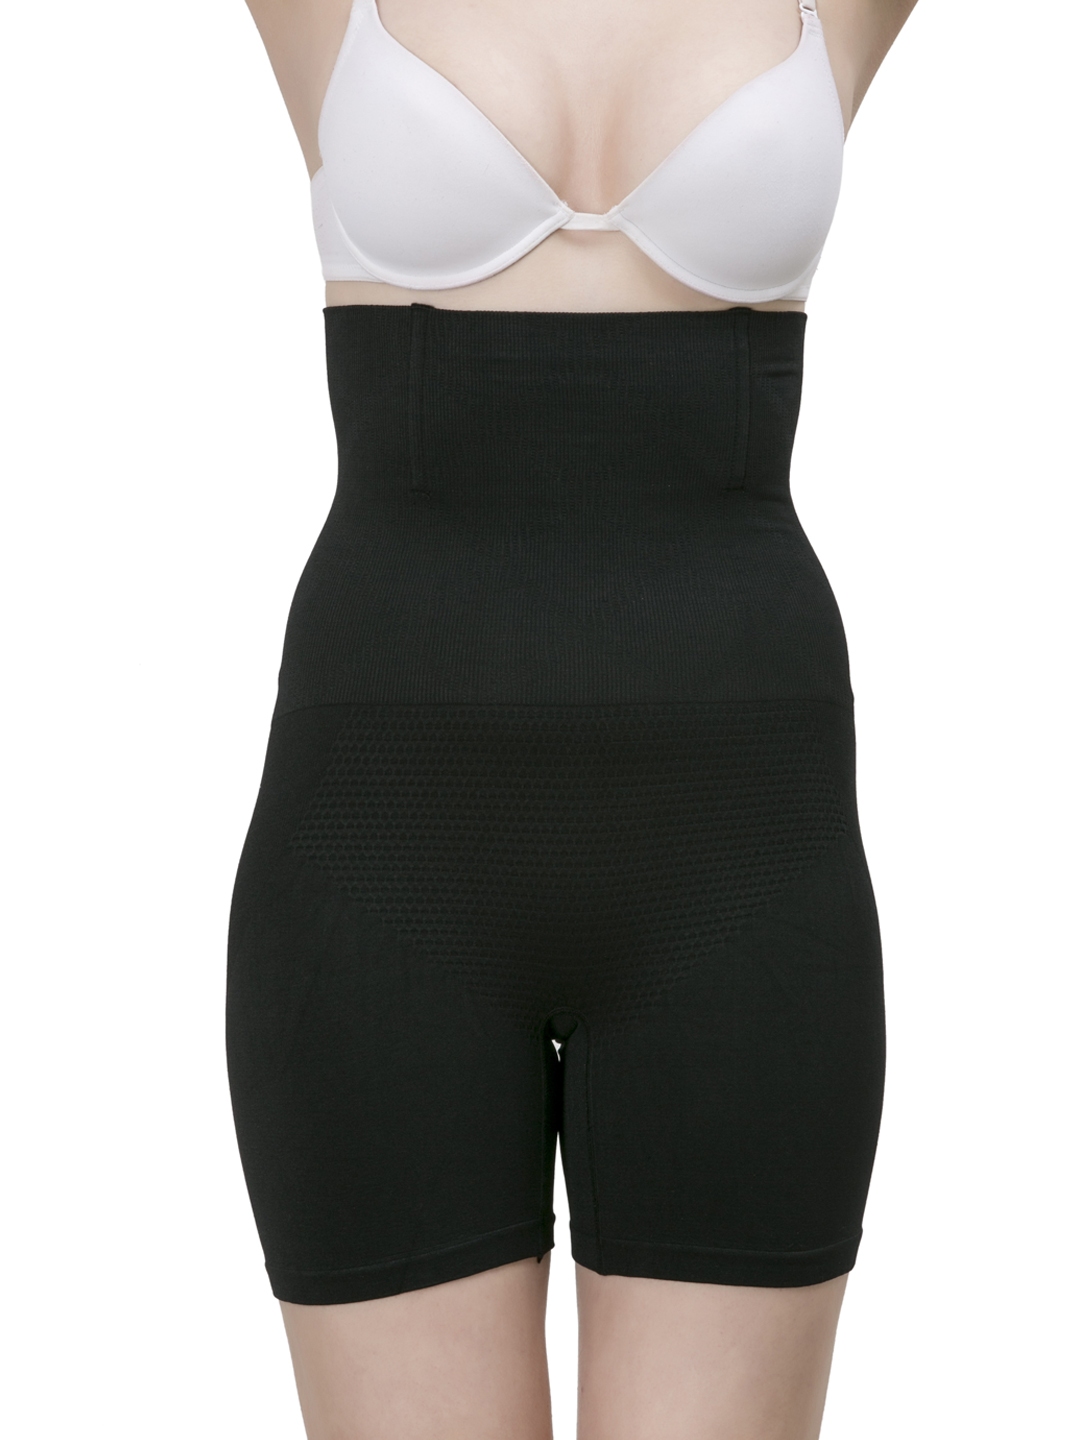 Buy Laceandme Black Seamless Wired High Waist & Short Thigh Shaper -  Shapewear for Women 2289994